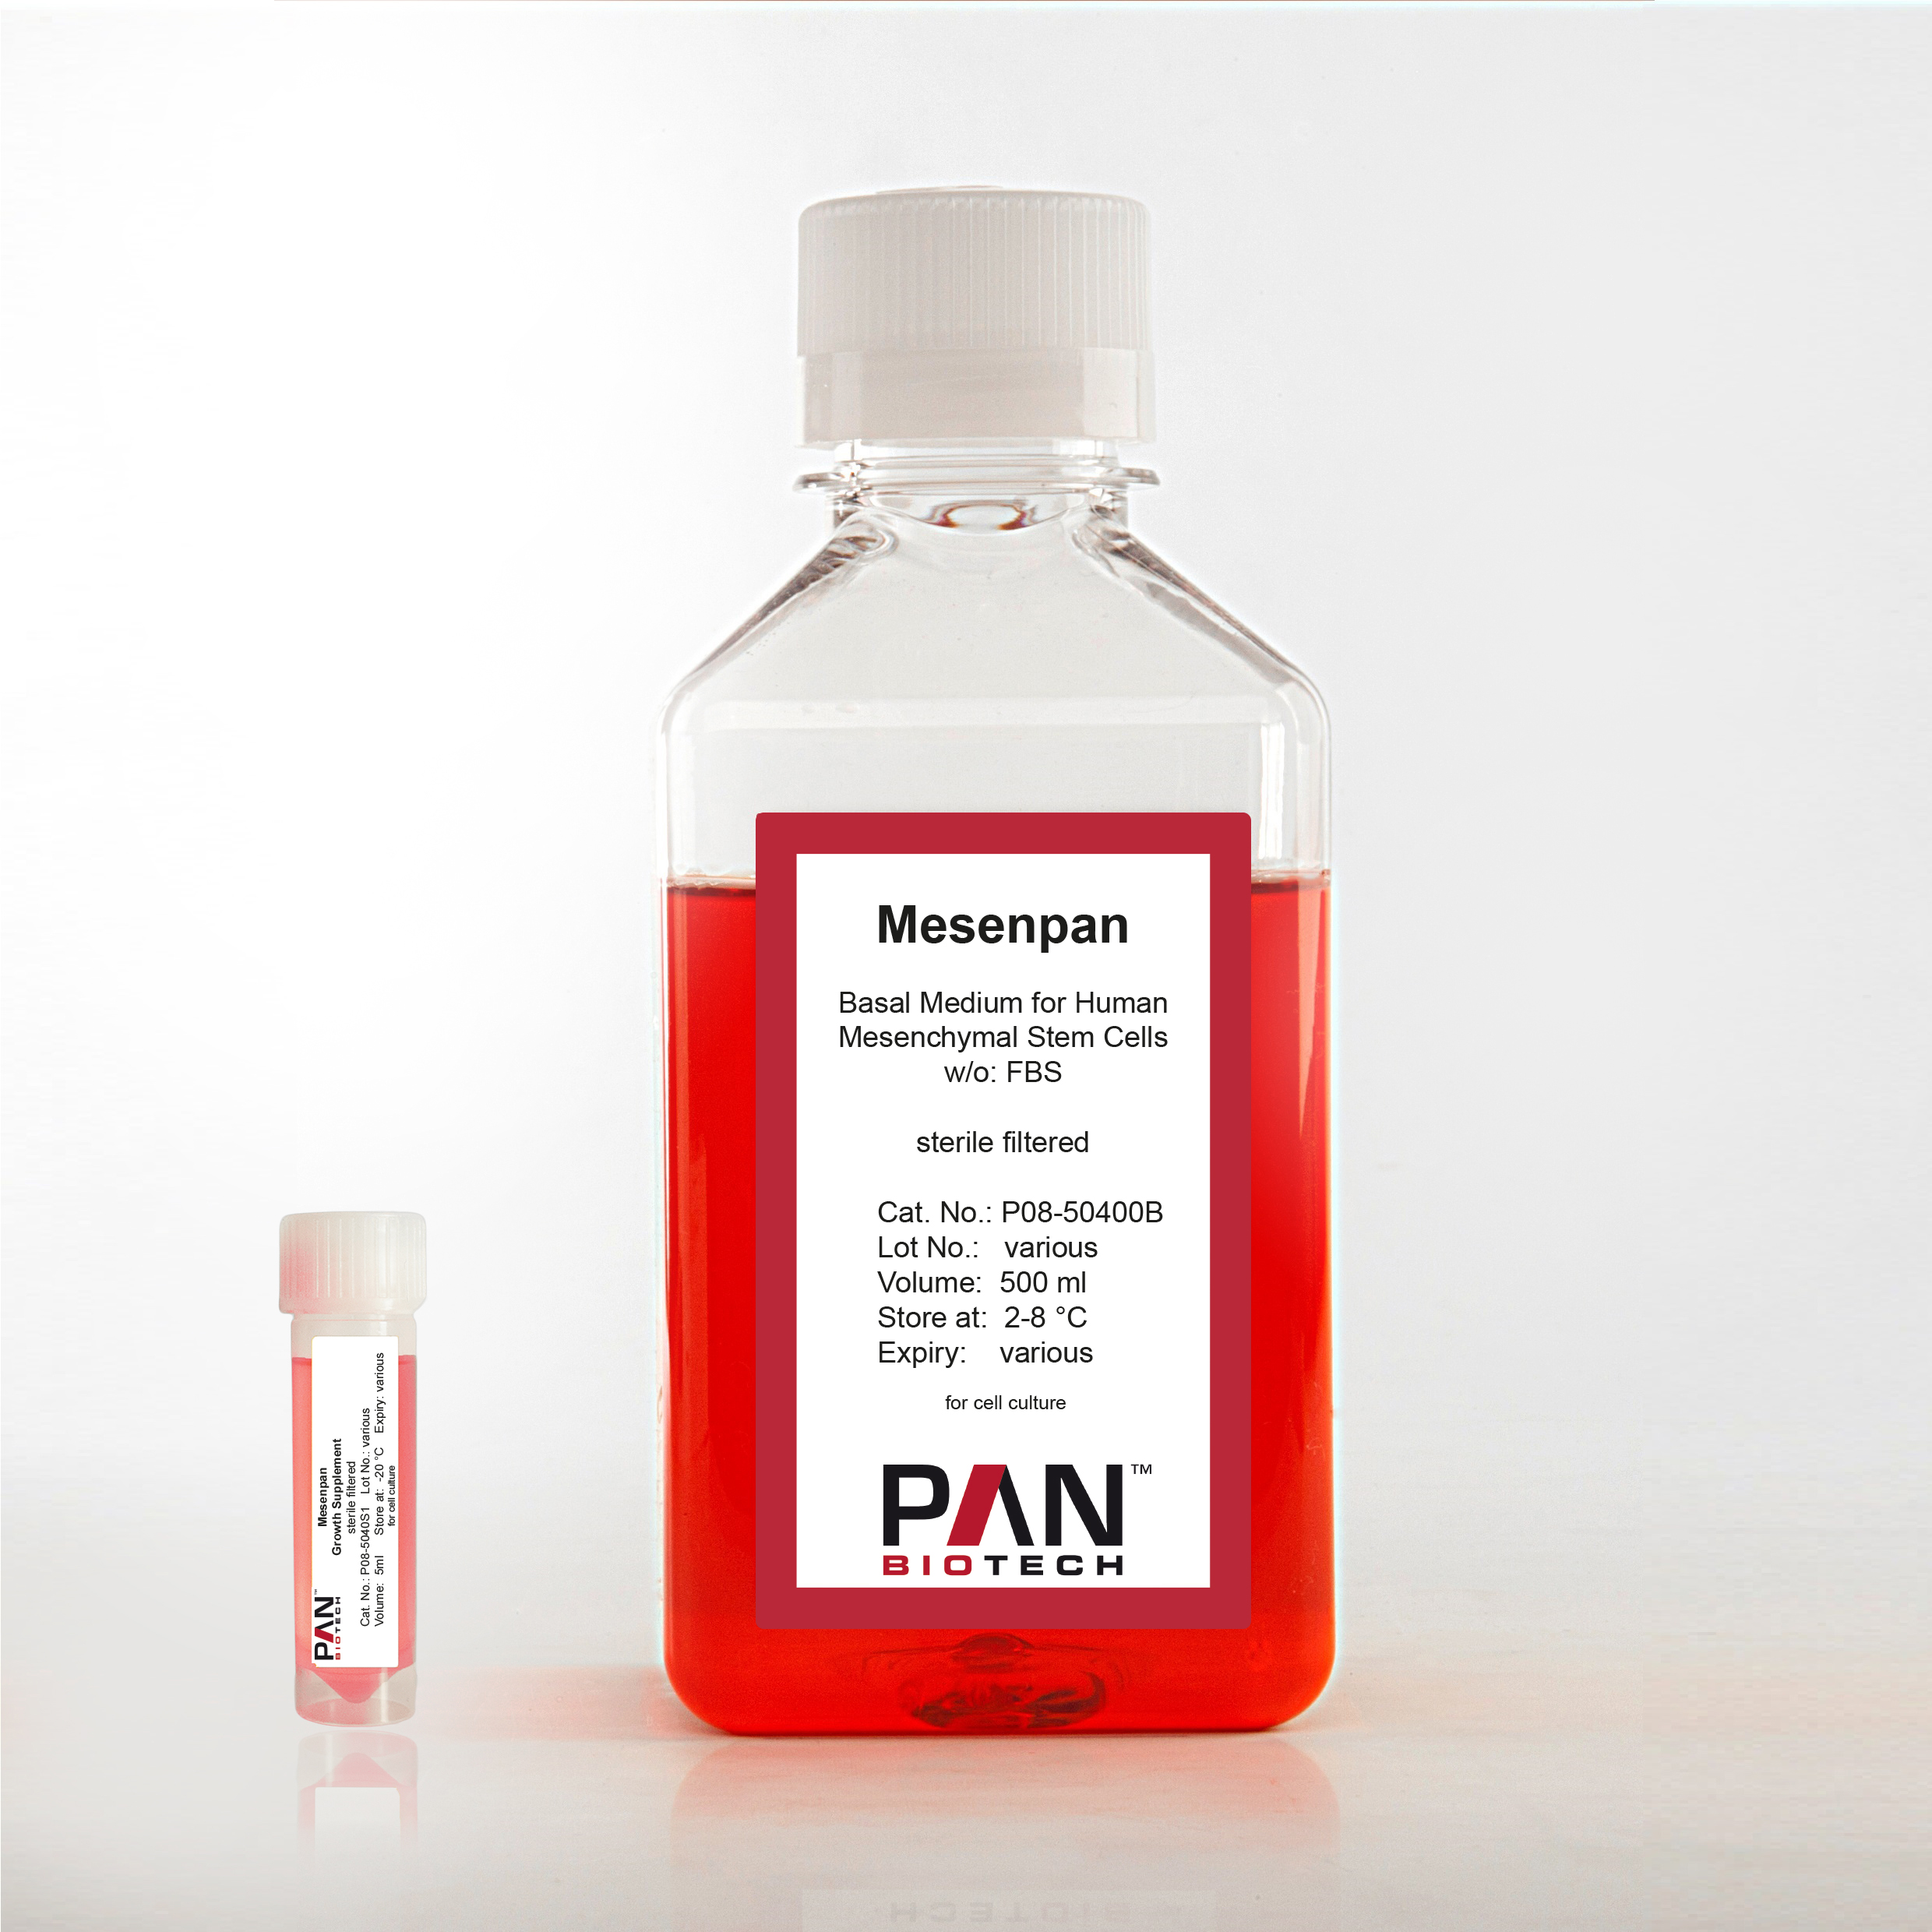 Mesenpan Special Medium for Human Mesenchymal Stem Cells, w/o: FBS